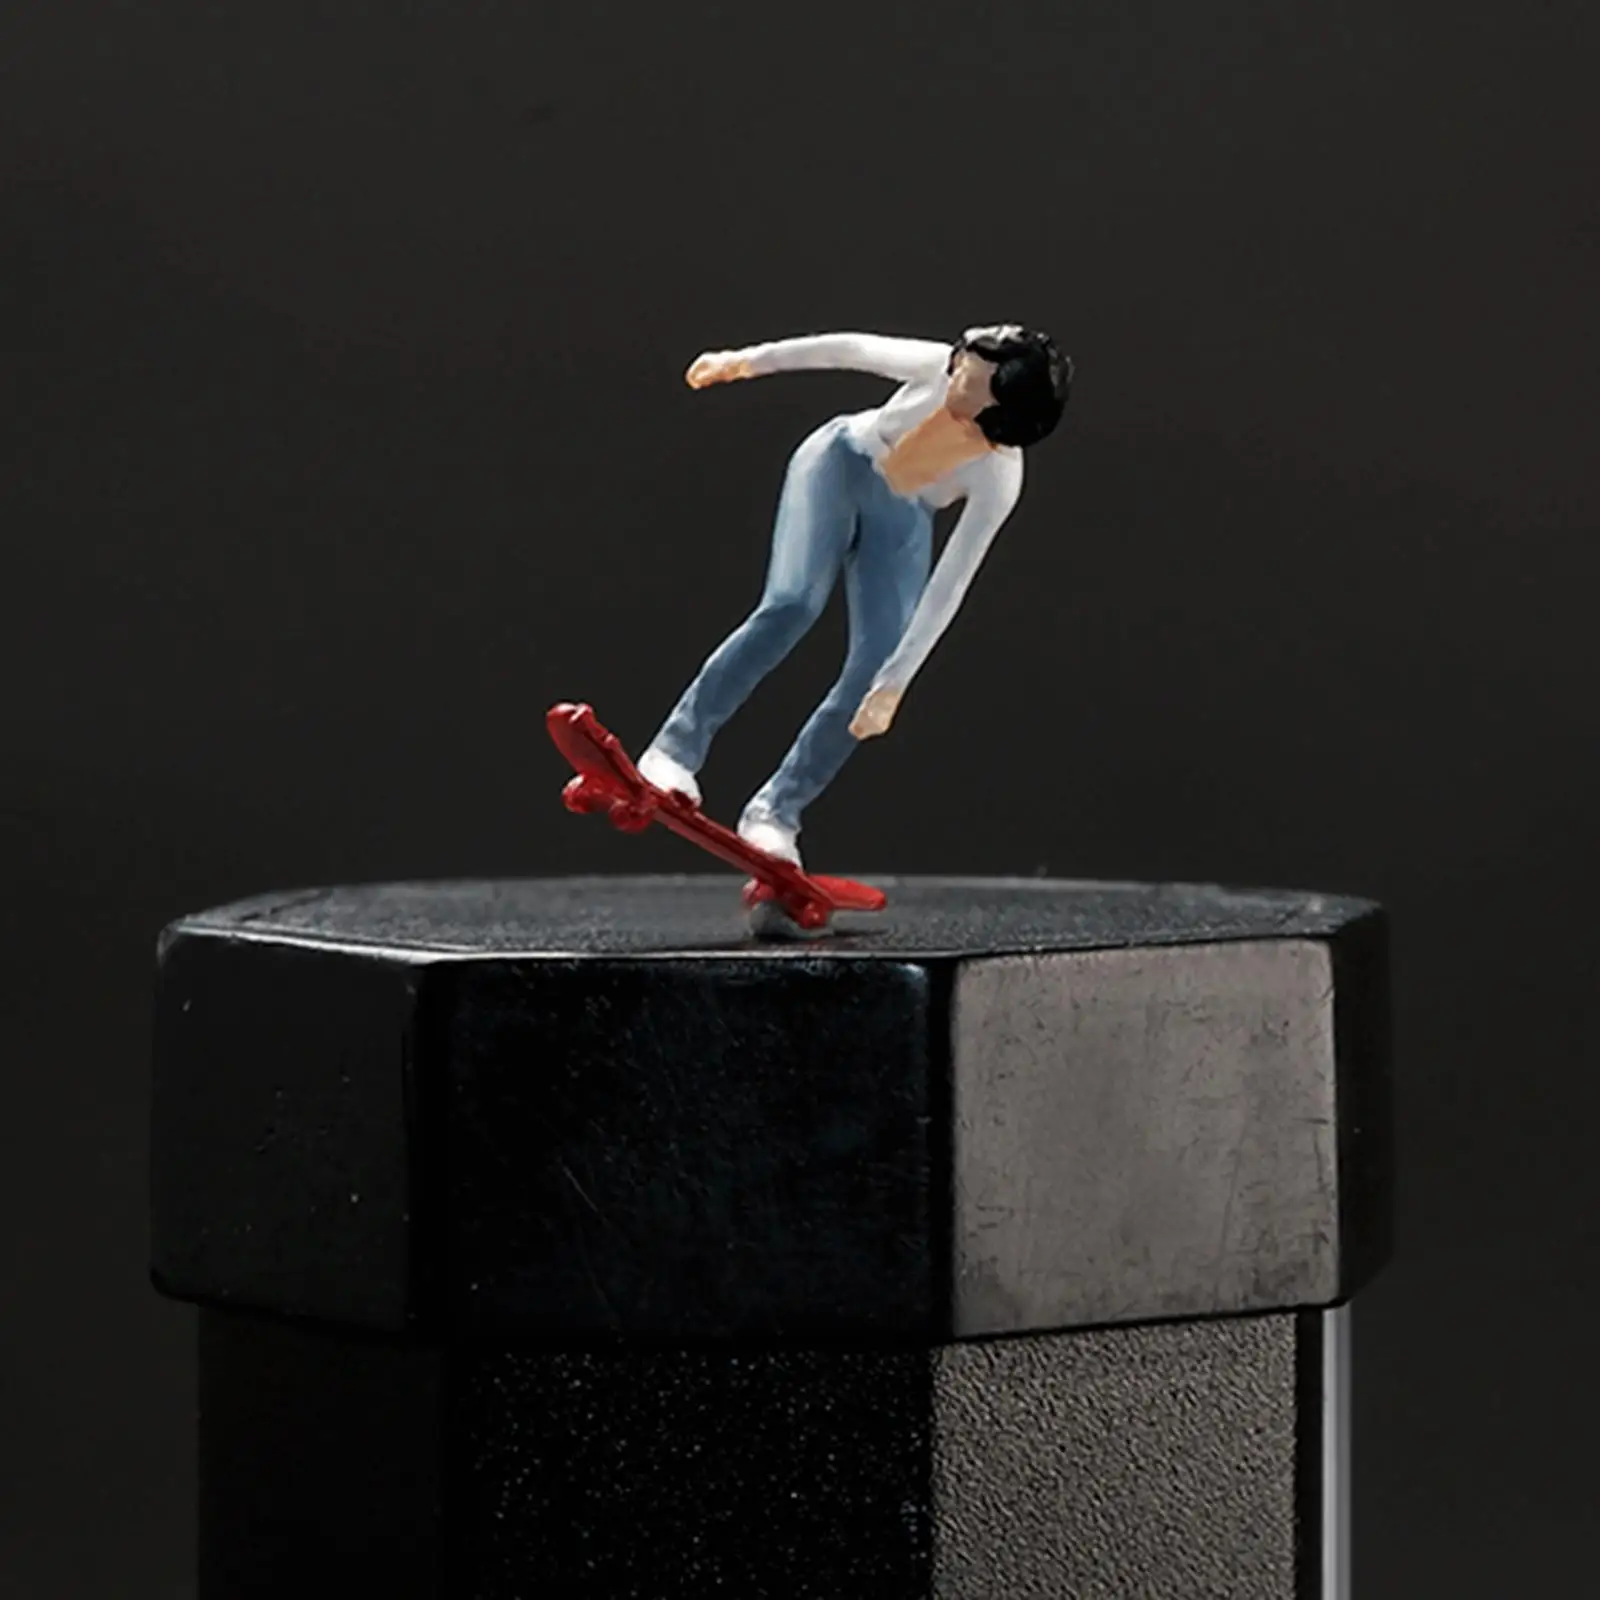 1/64 Scale Miniature Figure for Scene Layout Dollhouse Accessories Street